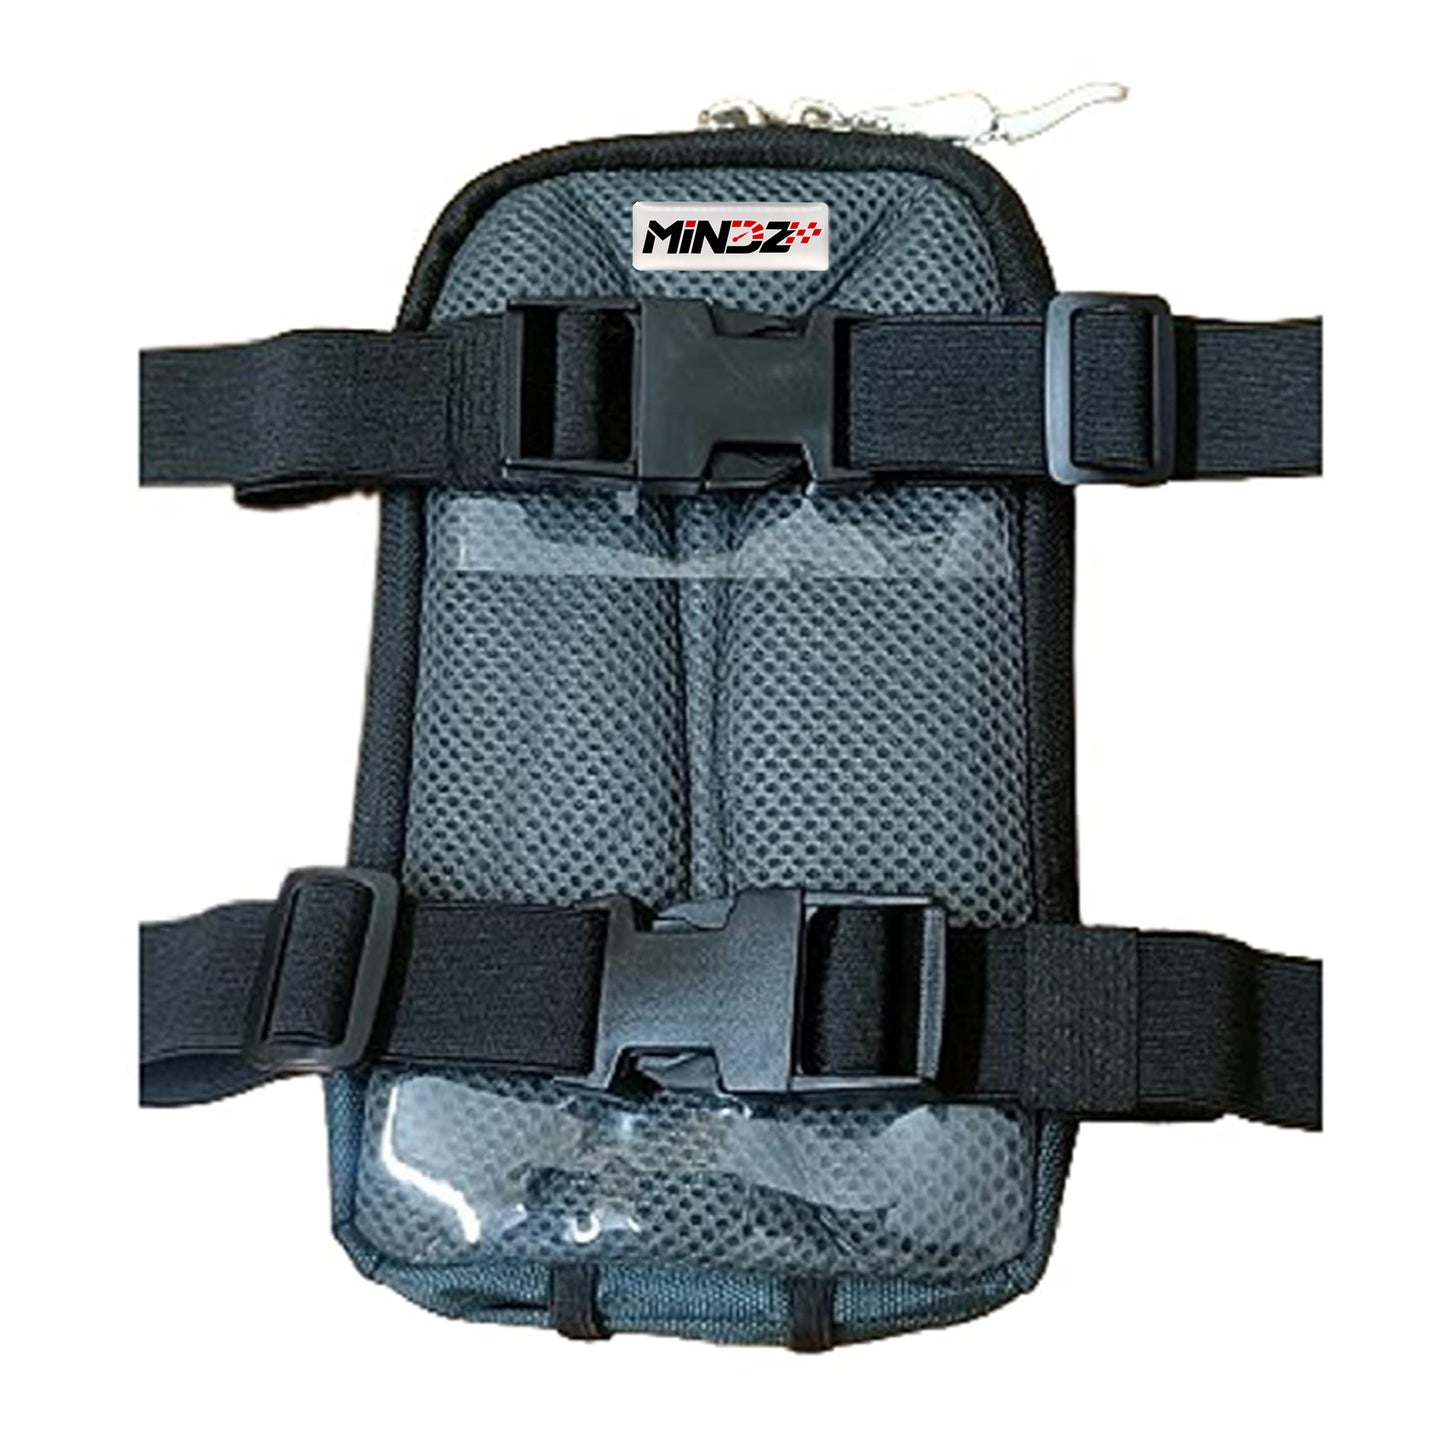 Premium Mobile Holder/Pouch-Bag for All Scooters Scooty Activa Jupiter EV's | Universal X1 Model (Grey & Black)